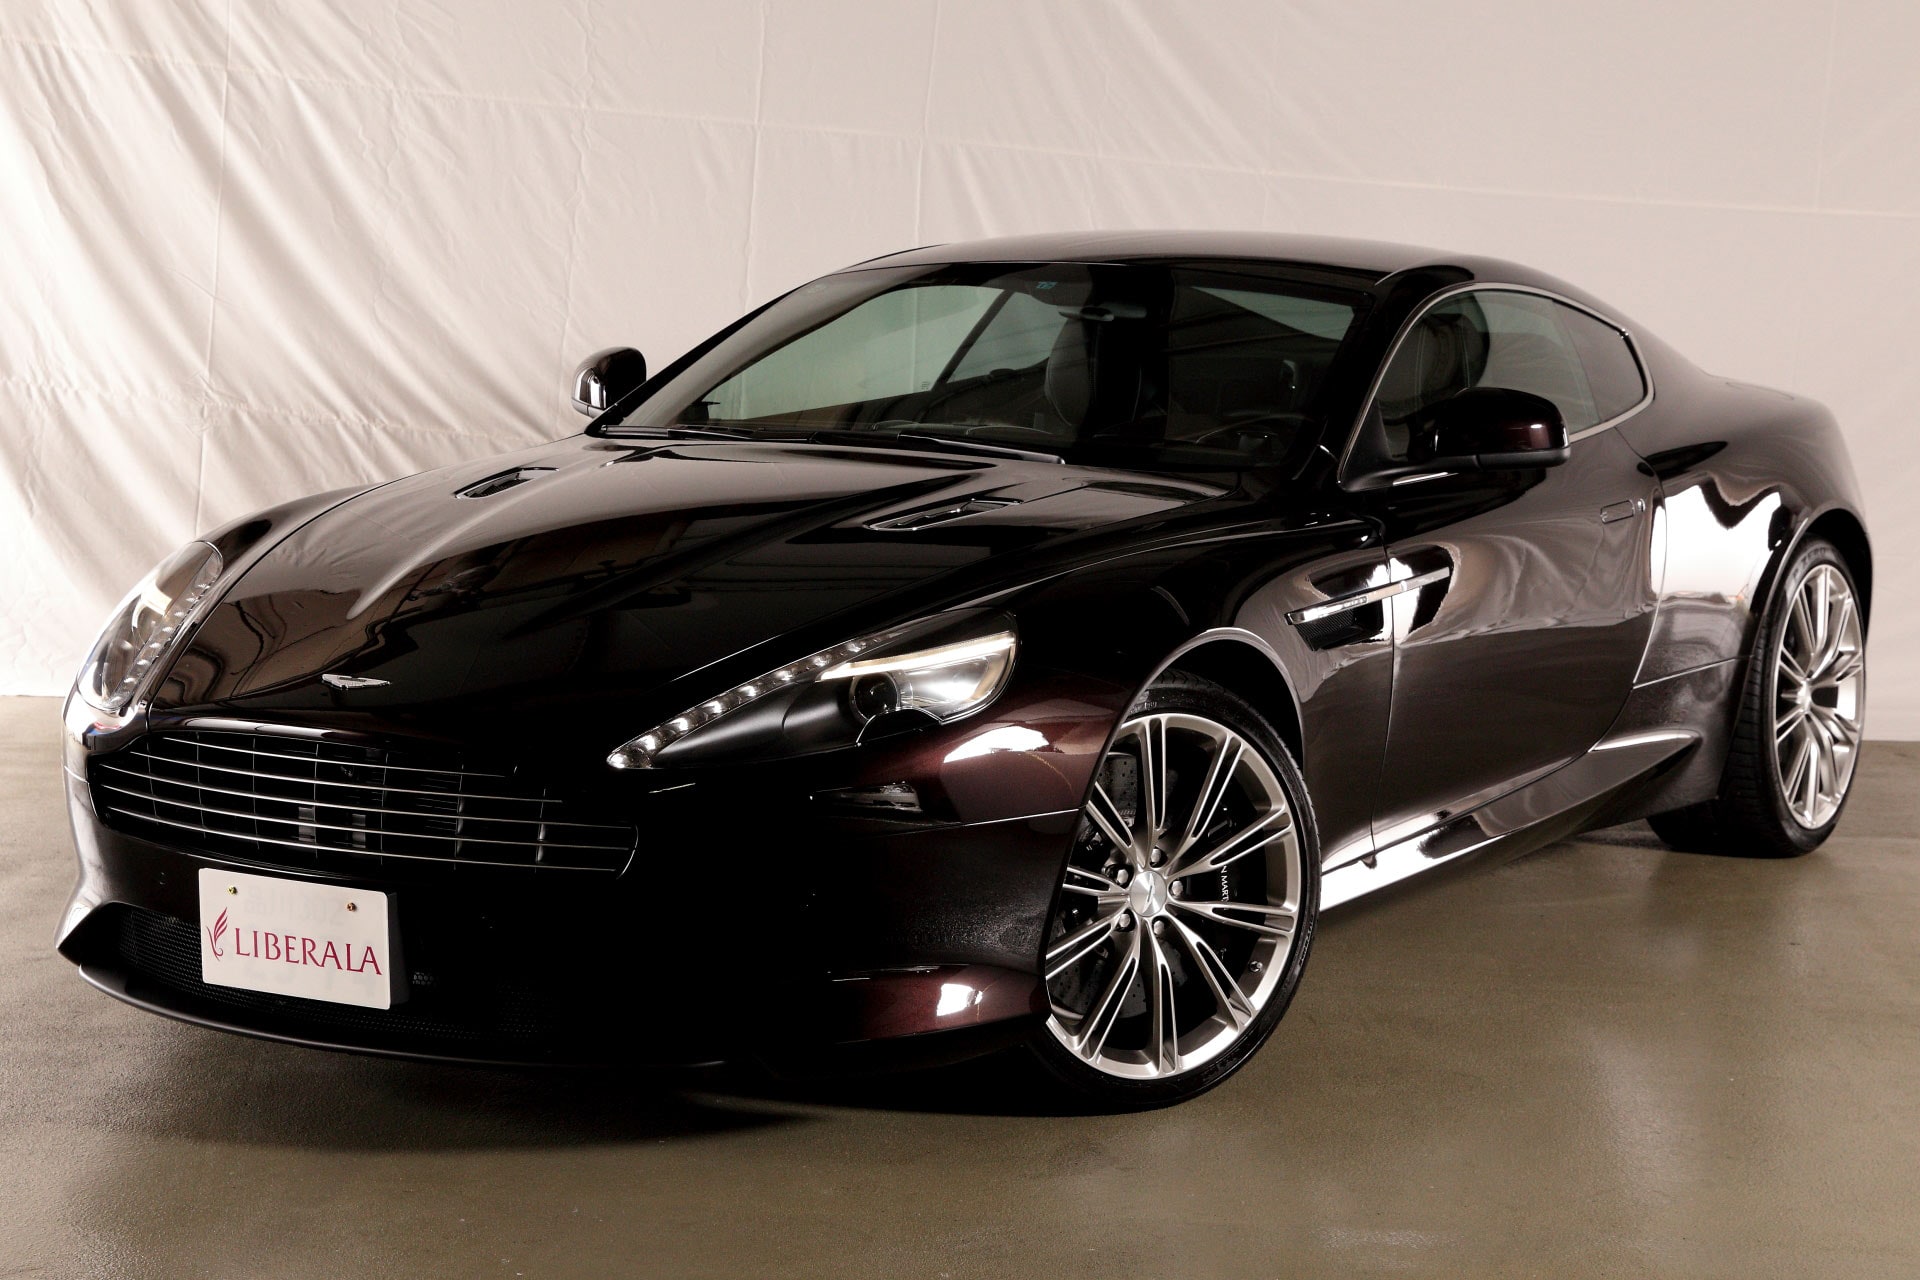 Aston Martin Virage (2012年式) 在庫詳細／3902 | LIBERALAでアストン 